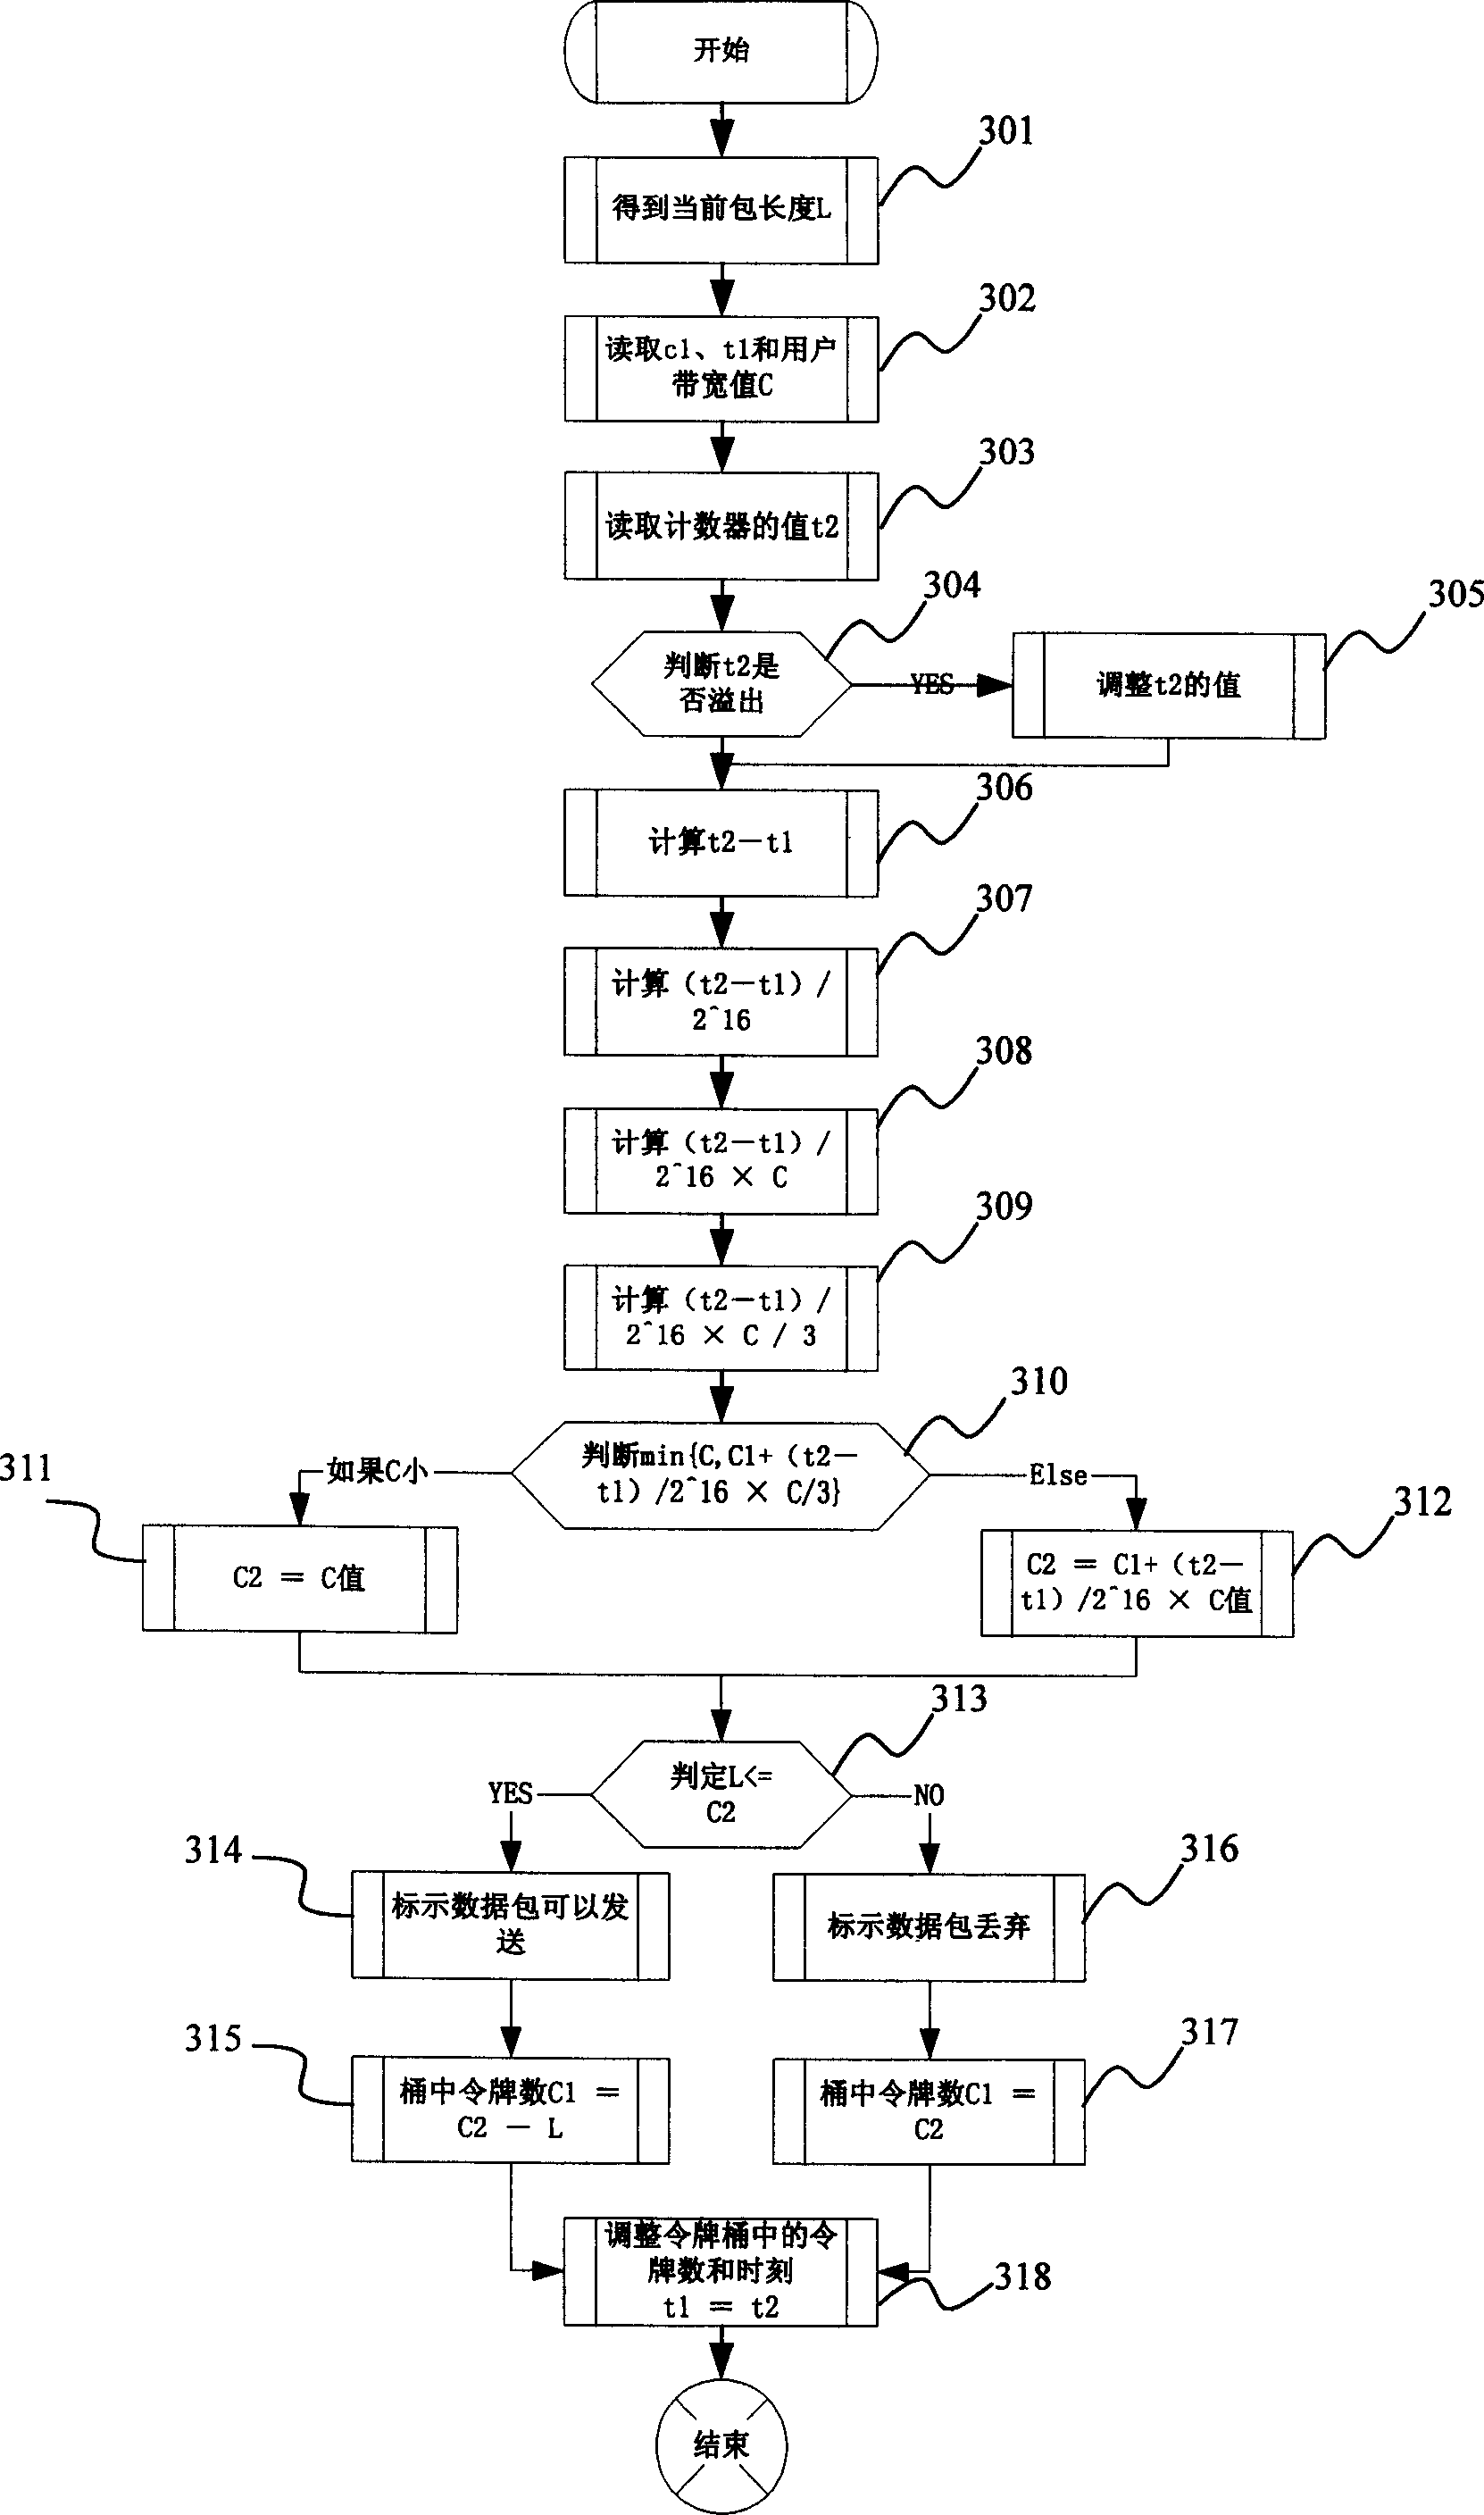 Flow-control method based on network processor